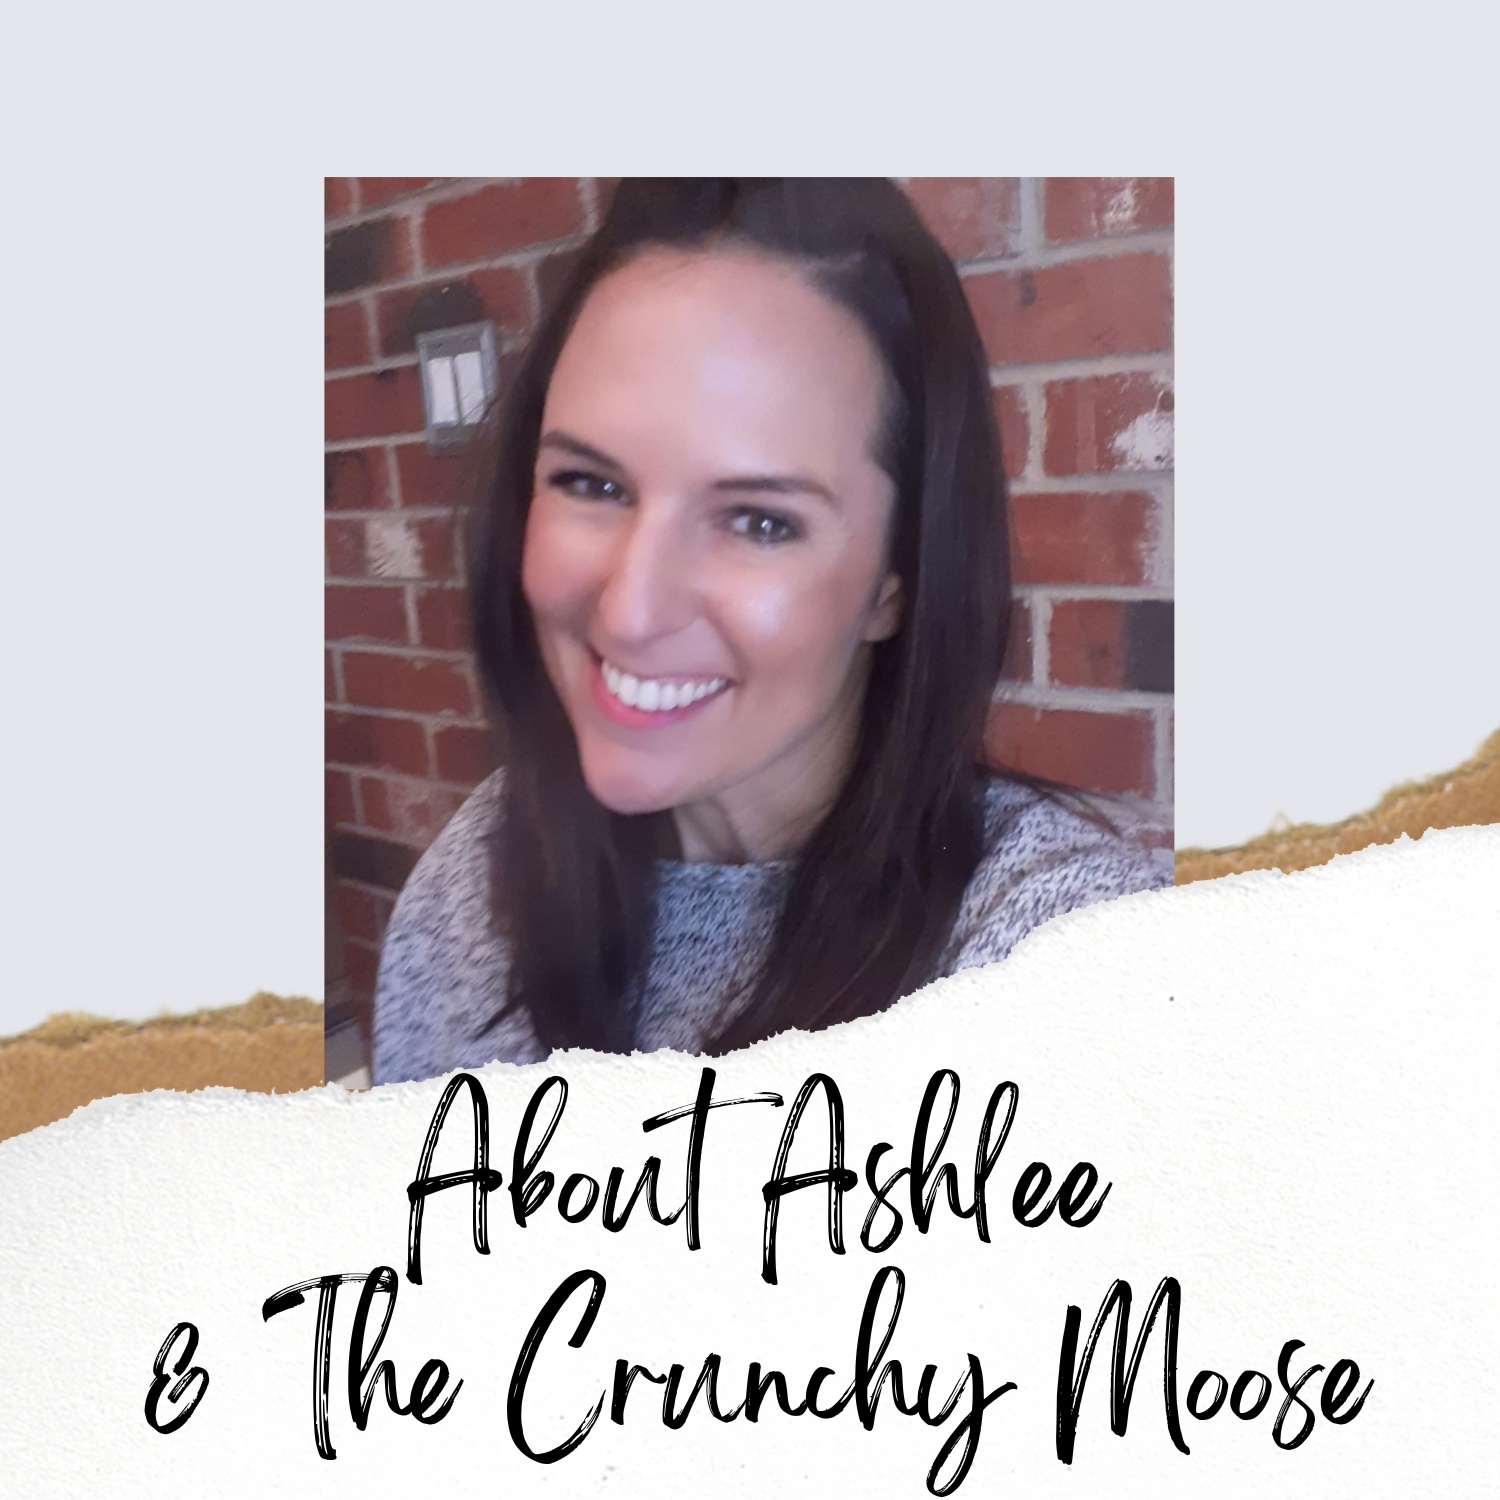 the crunchy moose blog